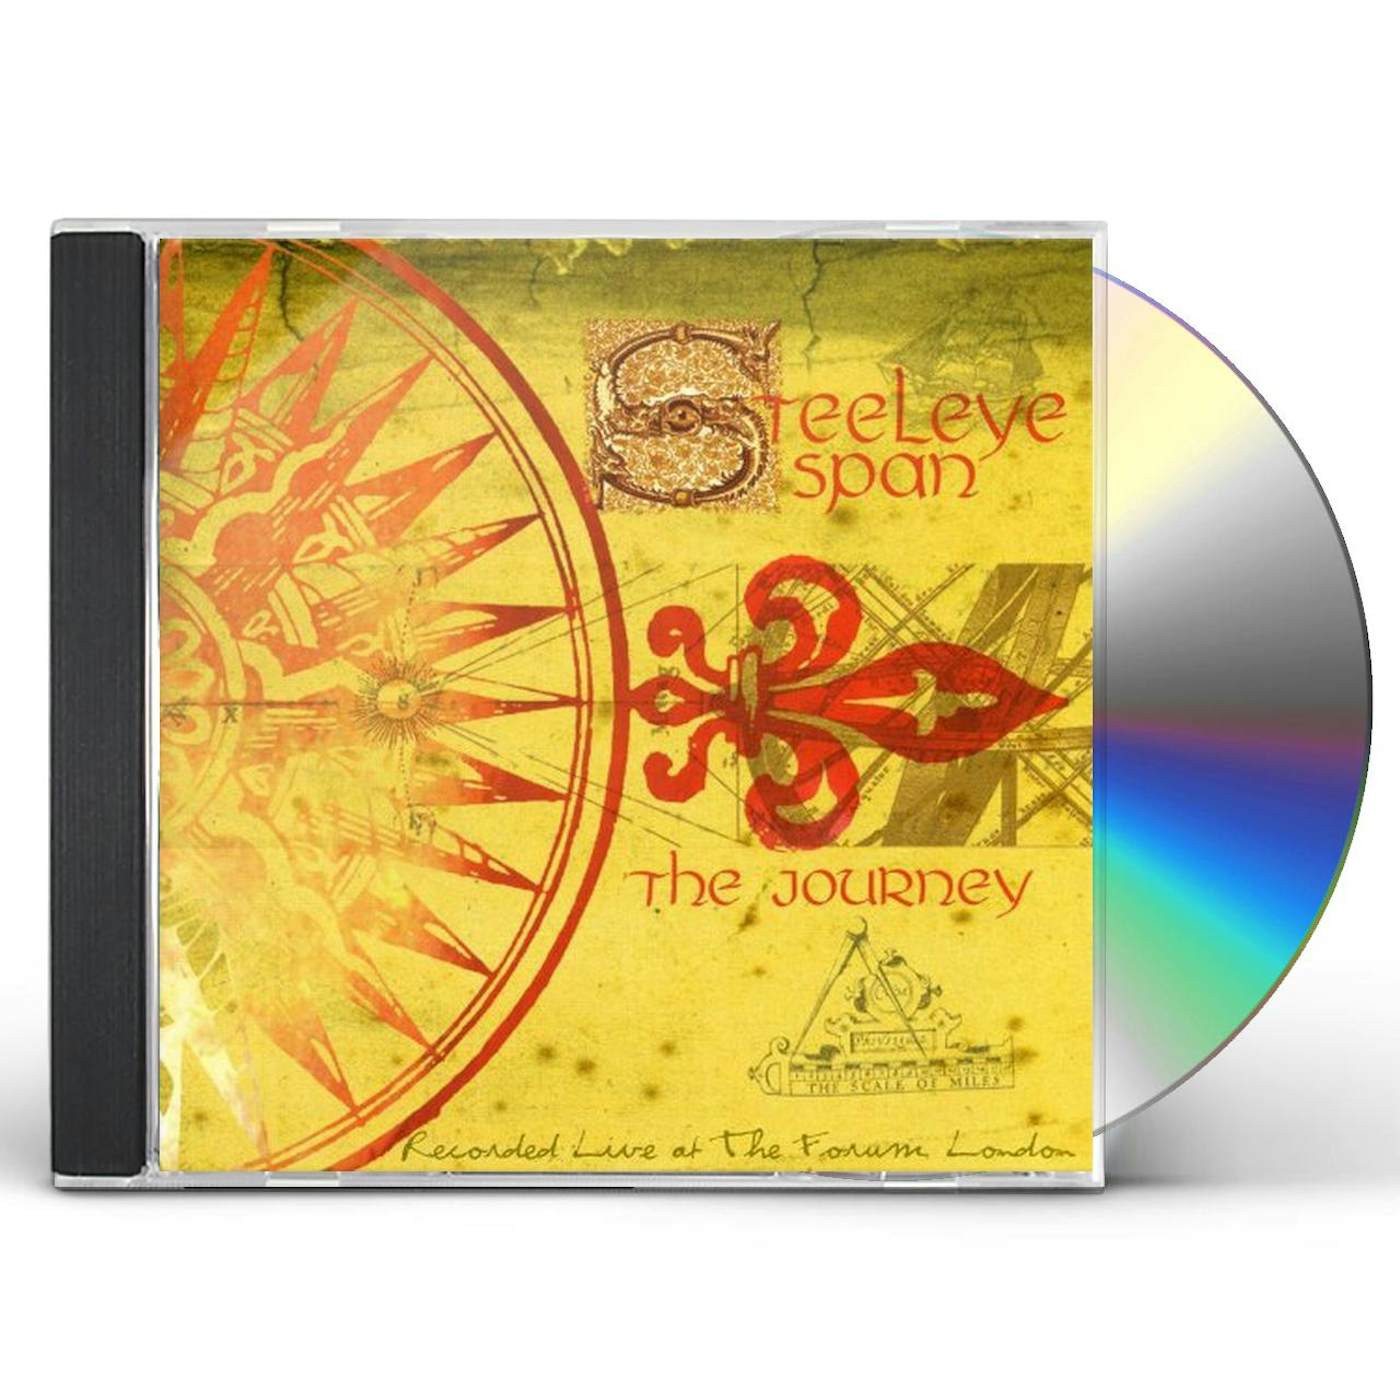 Steeleye Span JOURNEY CD